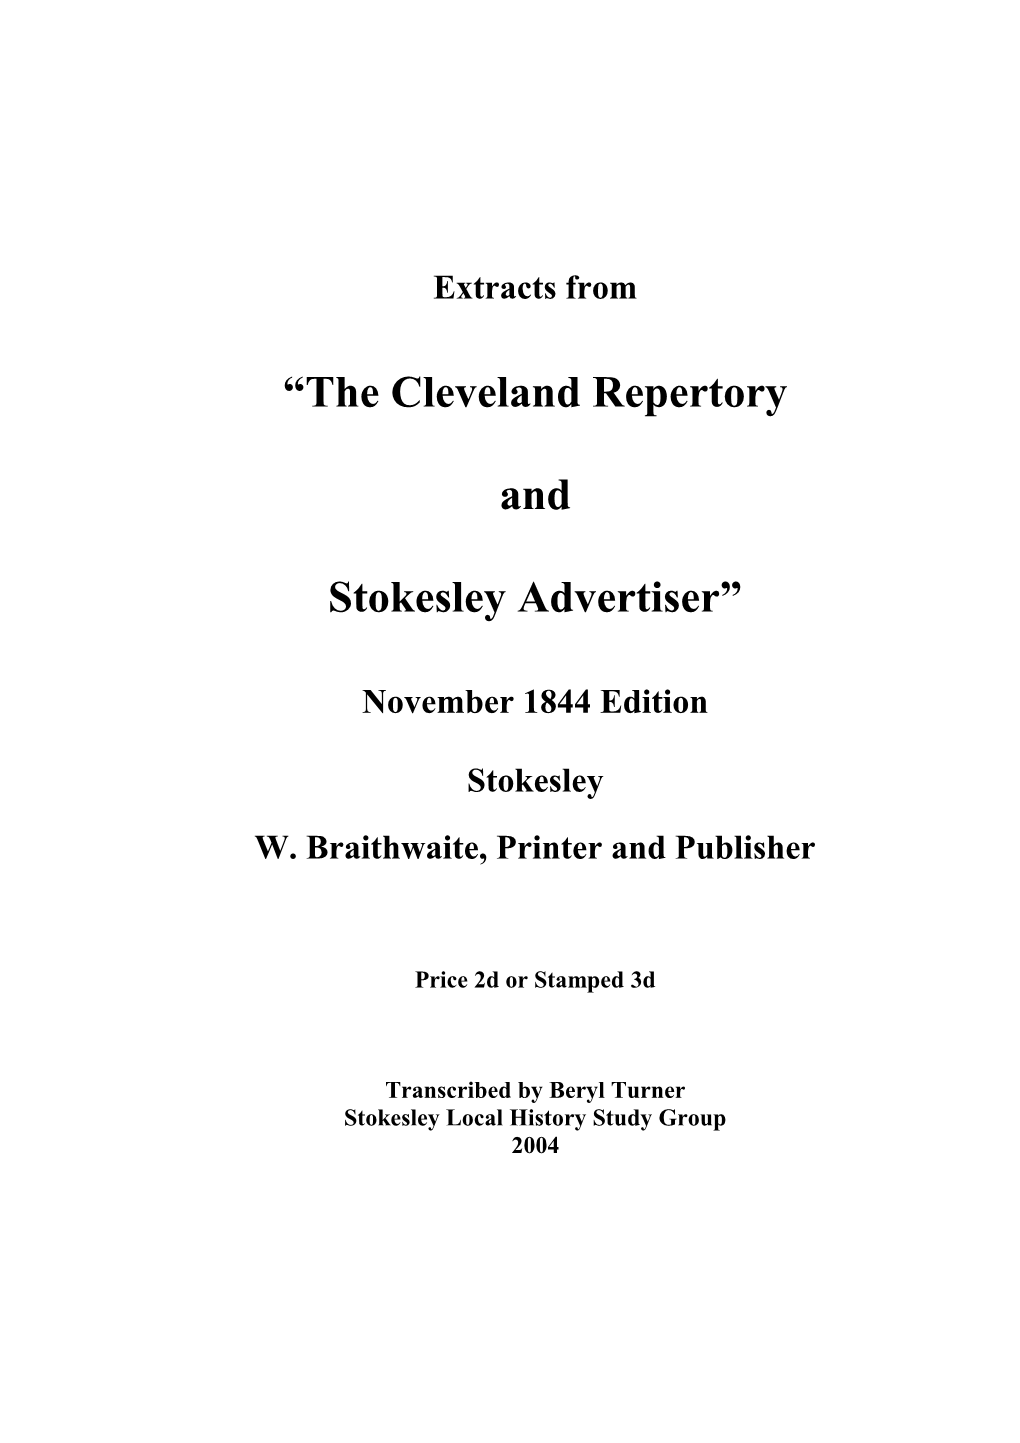 Cleveland Repertory & Stokesley Advertiser Nov 1844